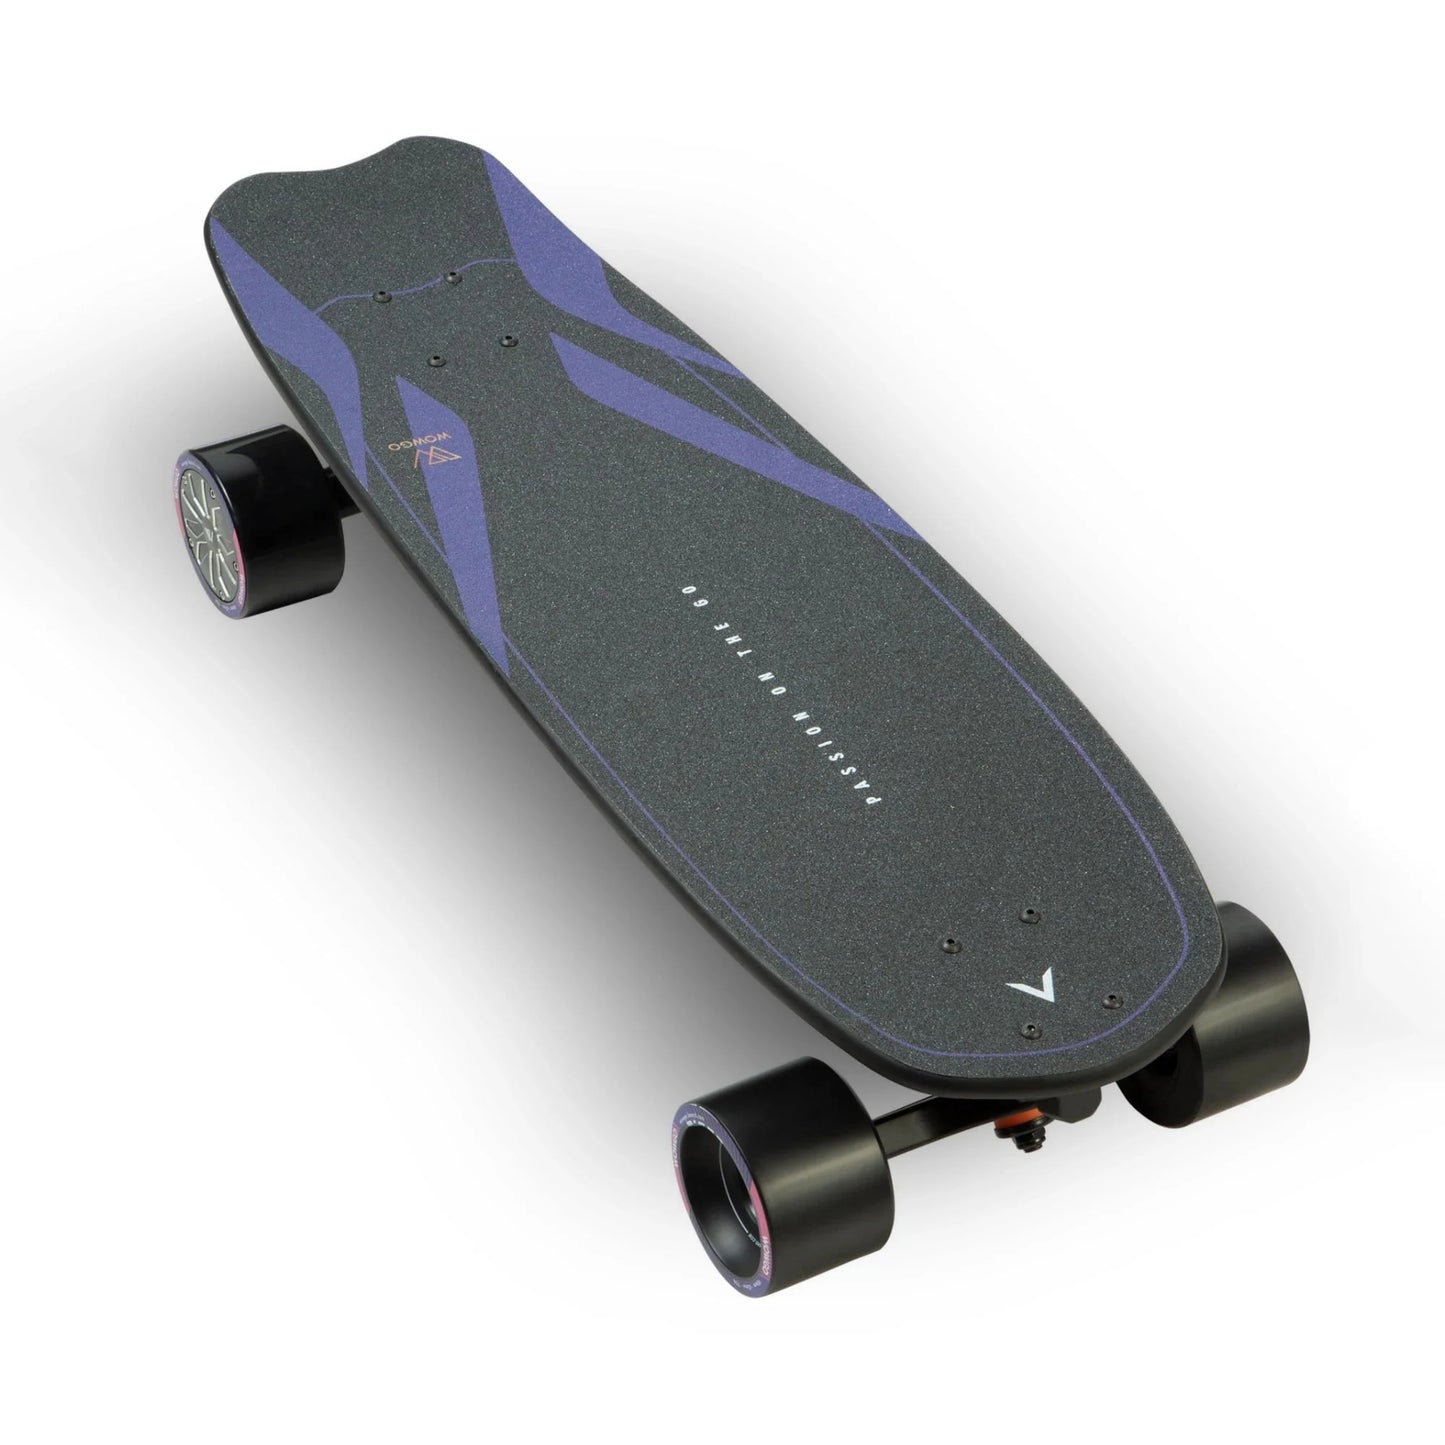 WowGo Mini 2 Electric Skateboard & Shortboard